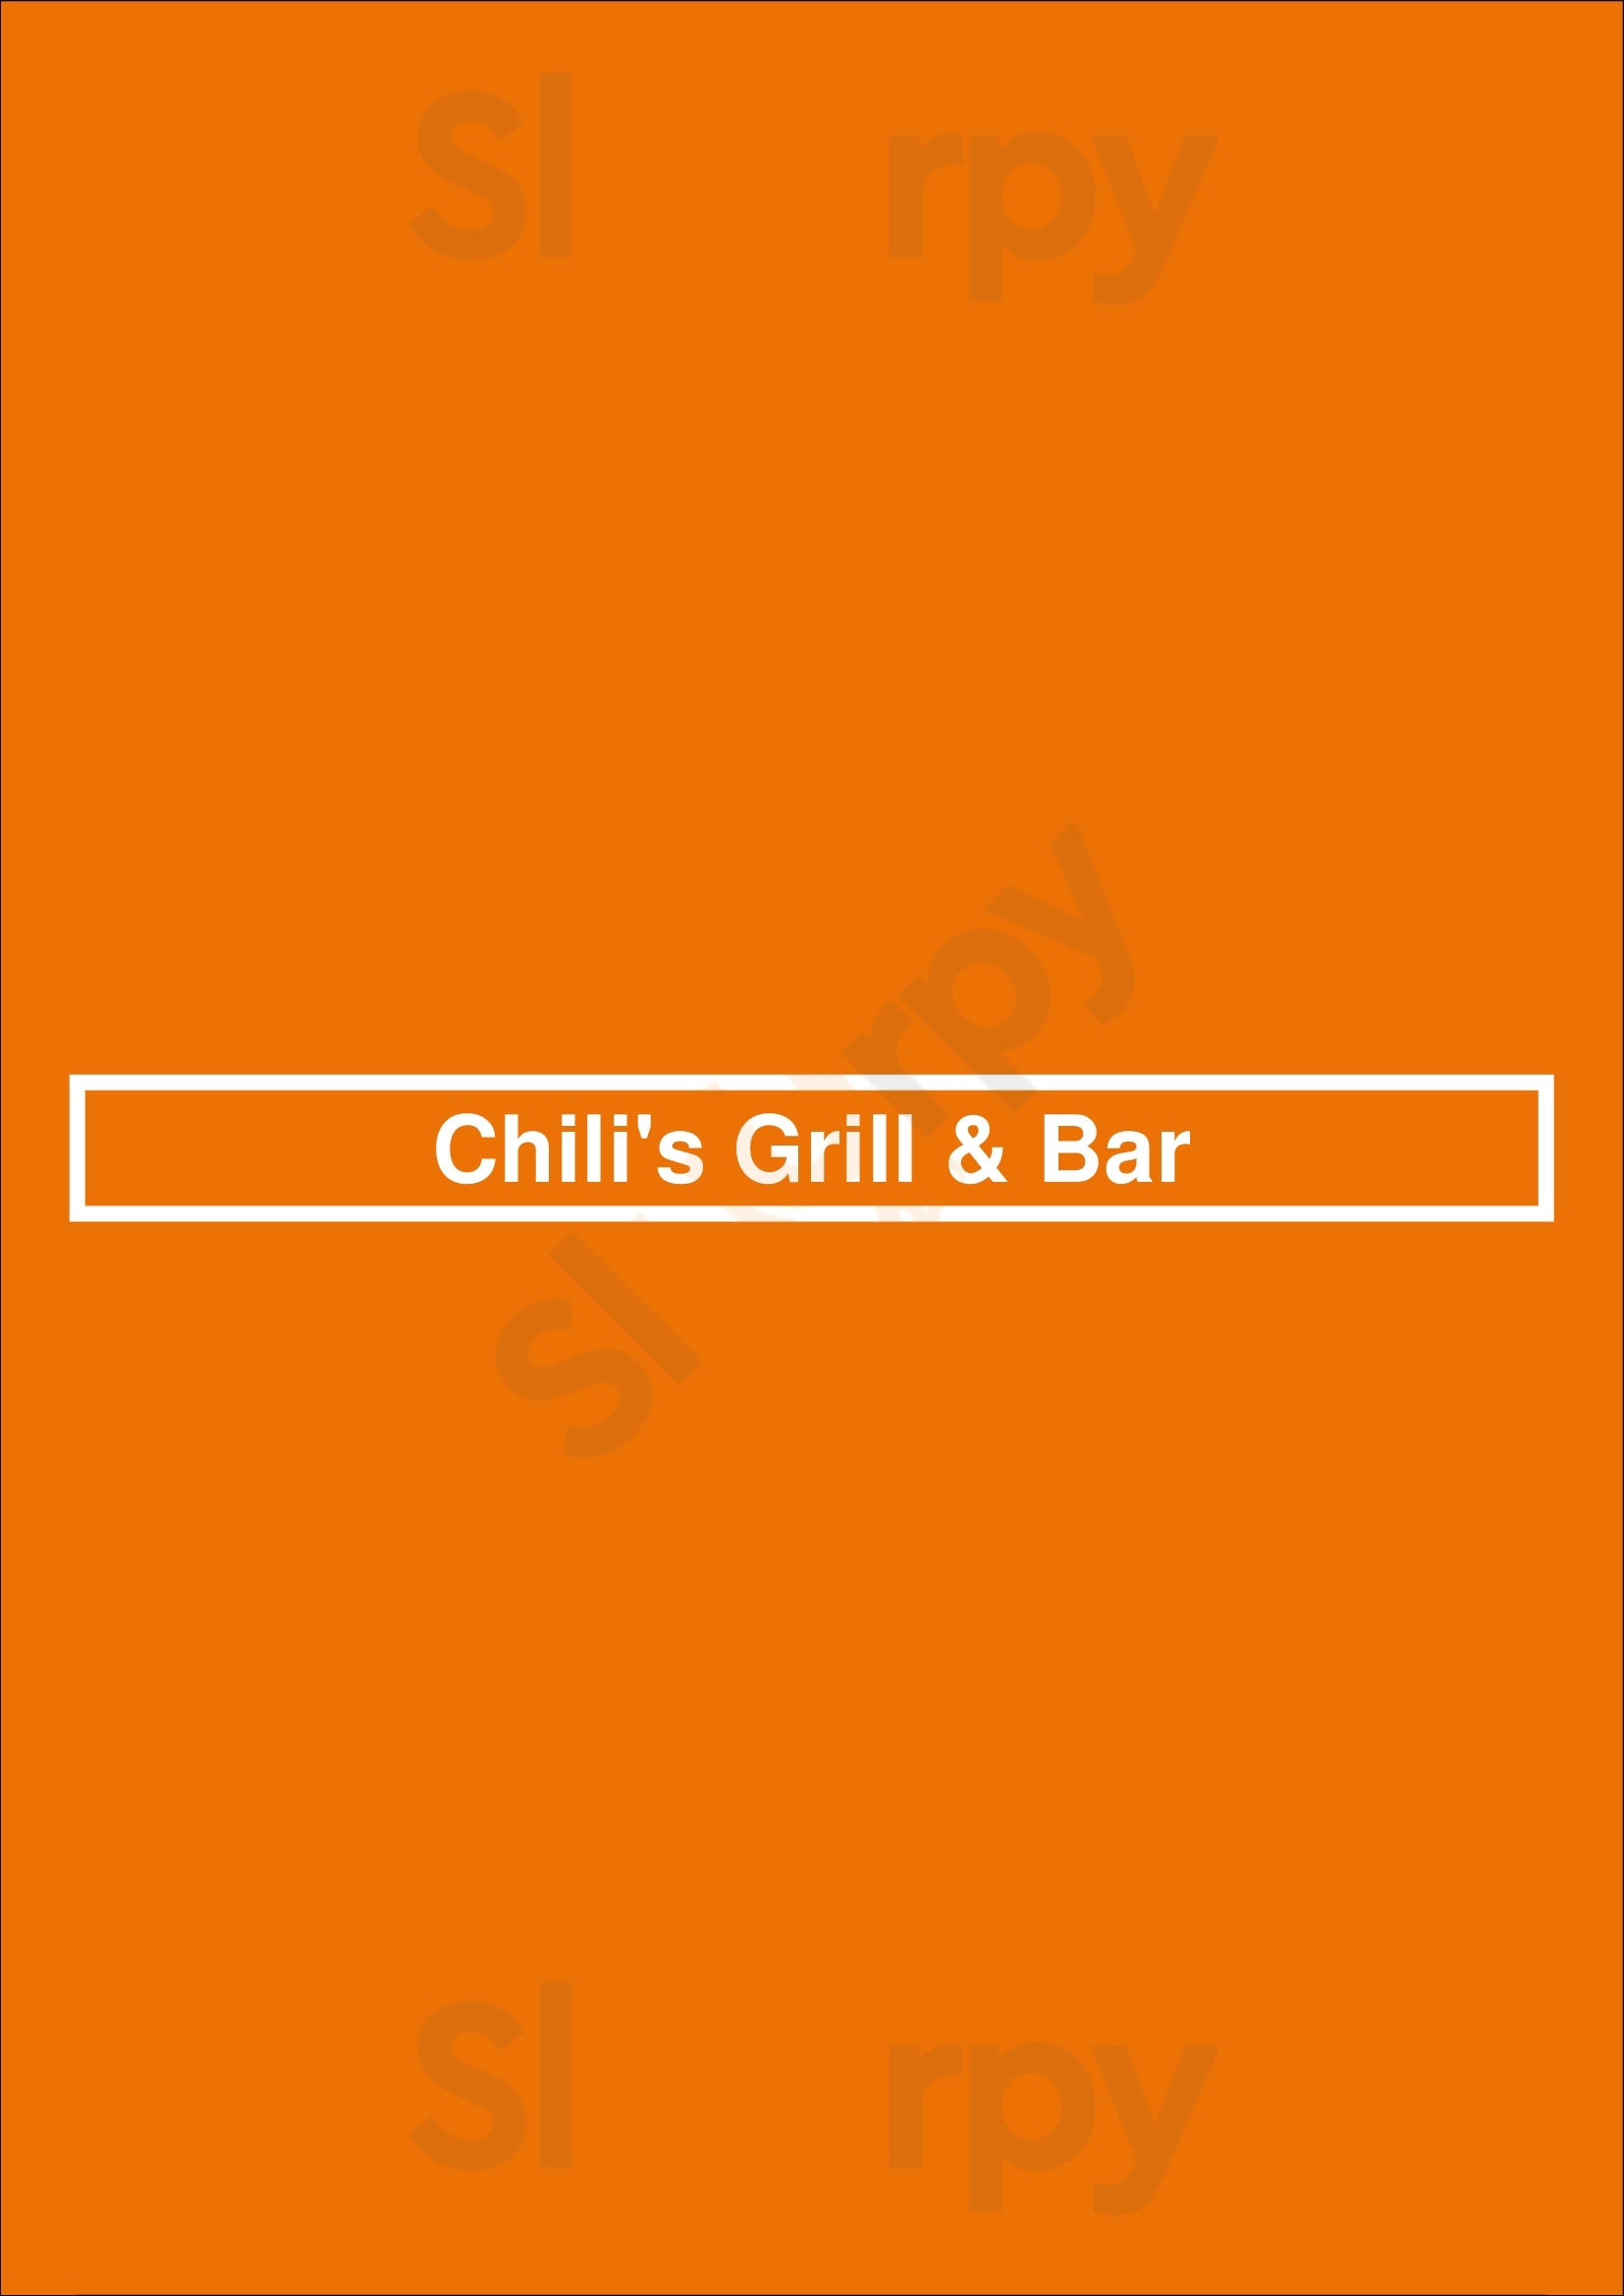 Chili's Grill & Bar Fort Lauderdale Menu - 1